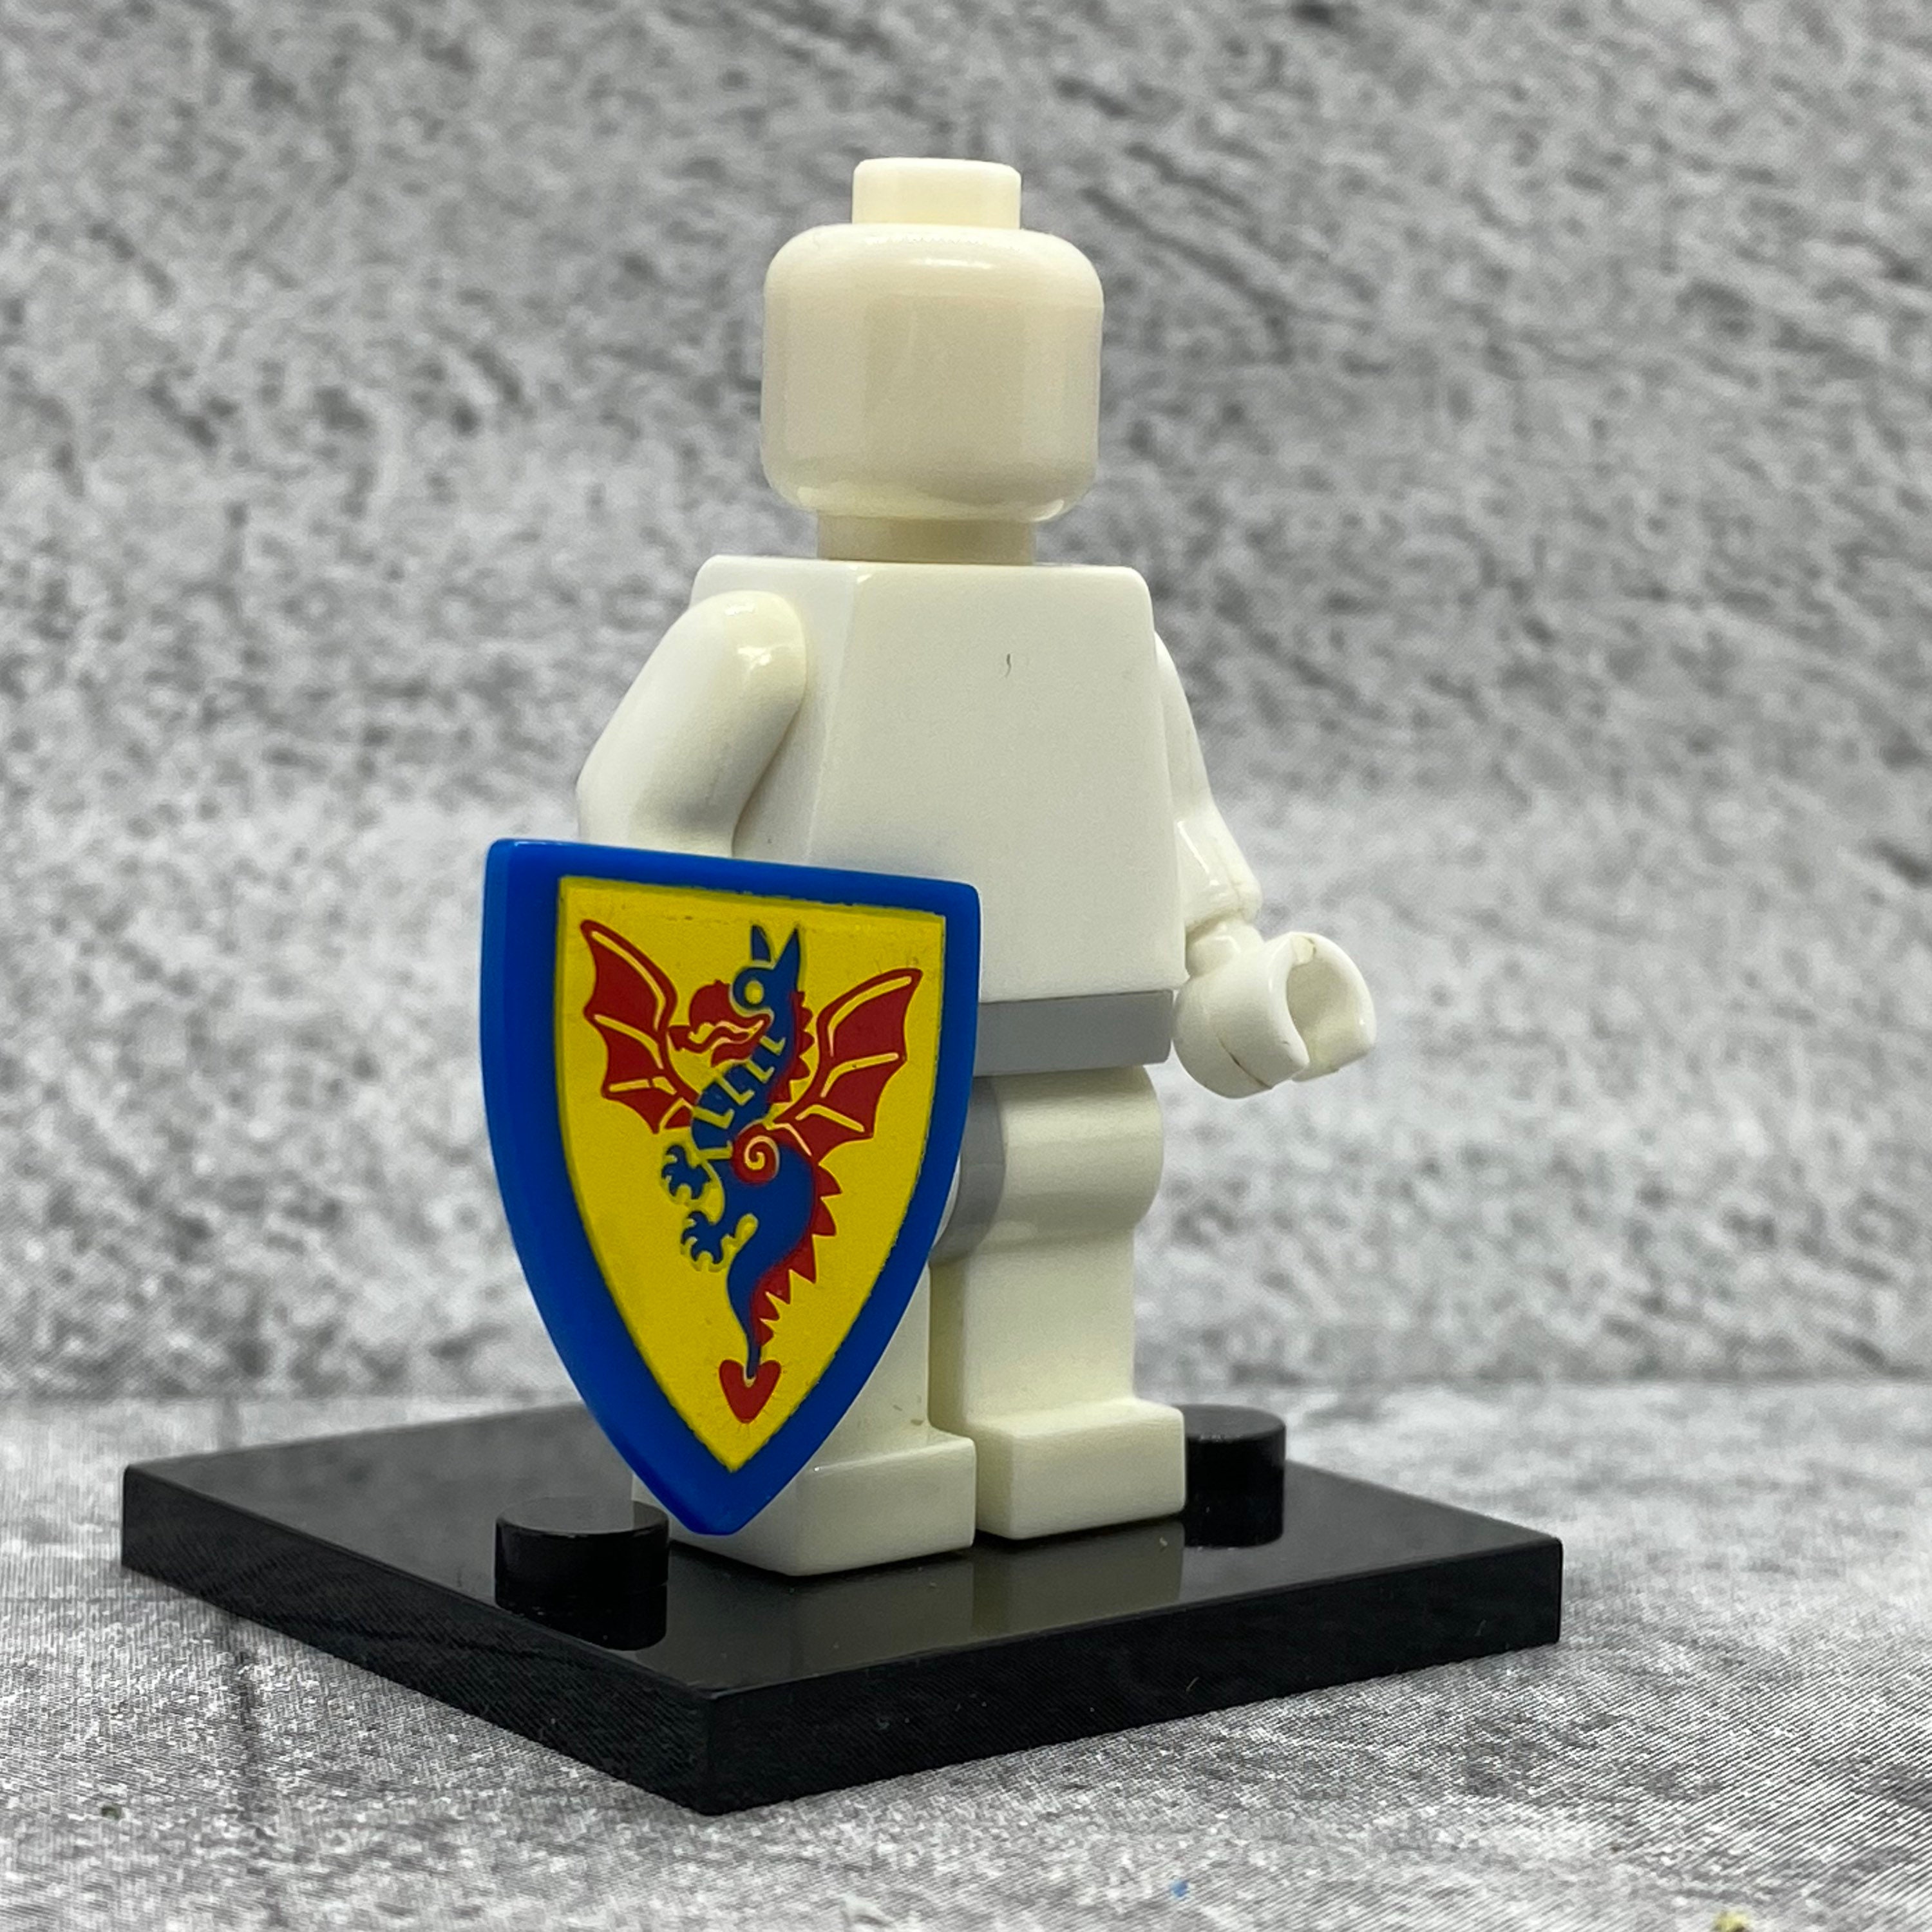 Lego 71011 Series 15 Wolfpack Knight Castle #3 Minifigure